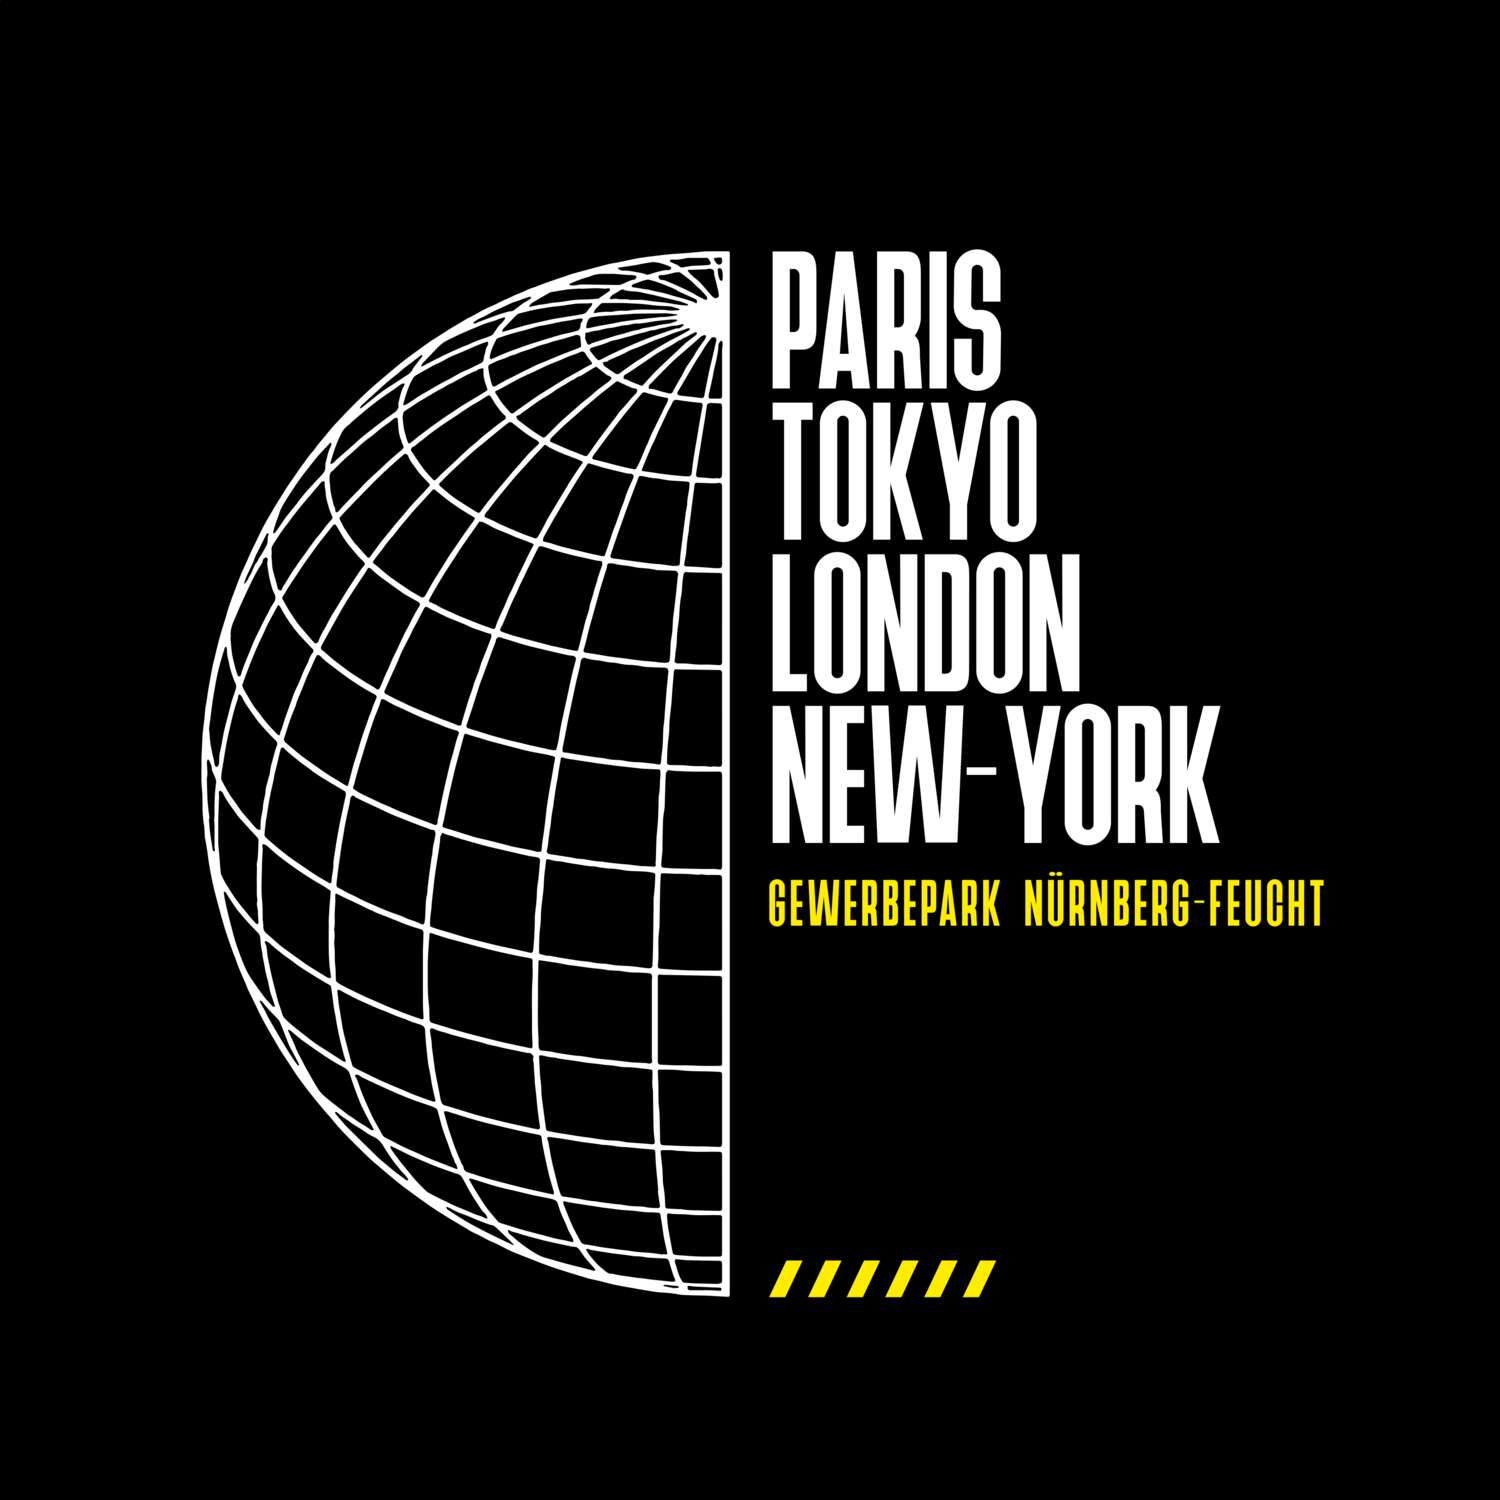 Gewerbepark Nürnberg-Feucht T-Shirt »Paris Tokyo London«